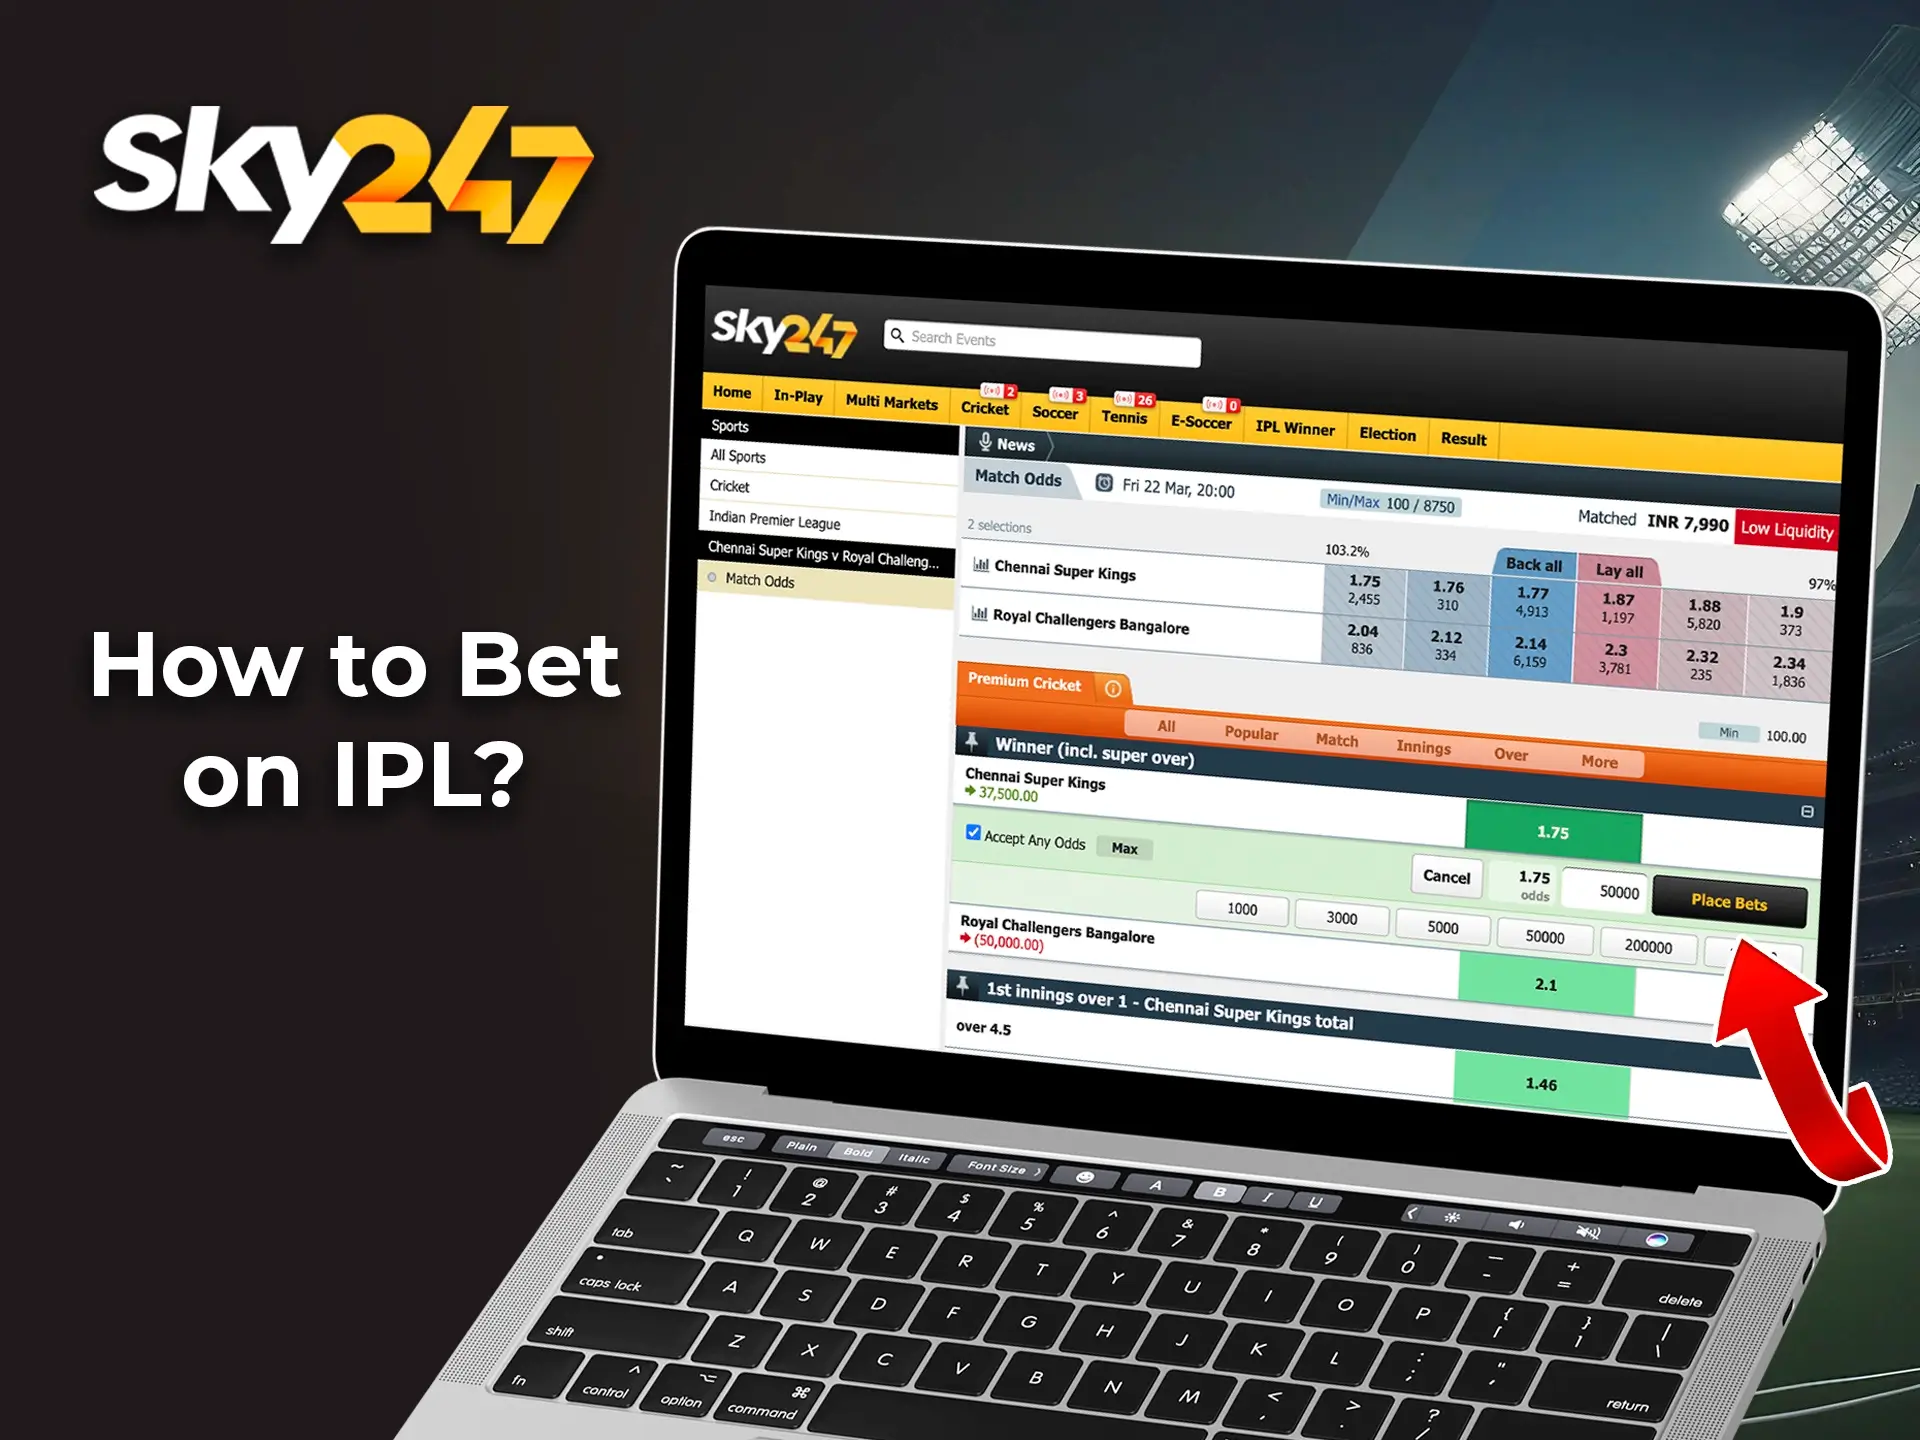 Take advantage of Sky247's bonus program and bet on your IPL favourites.